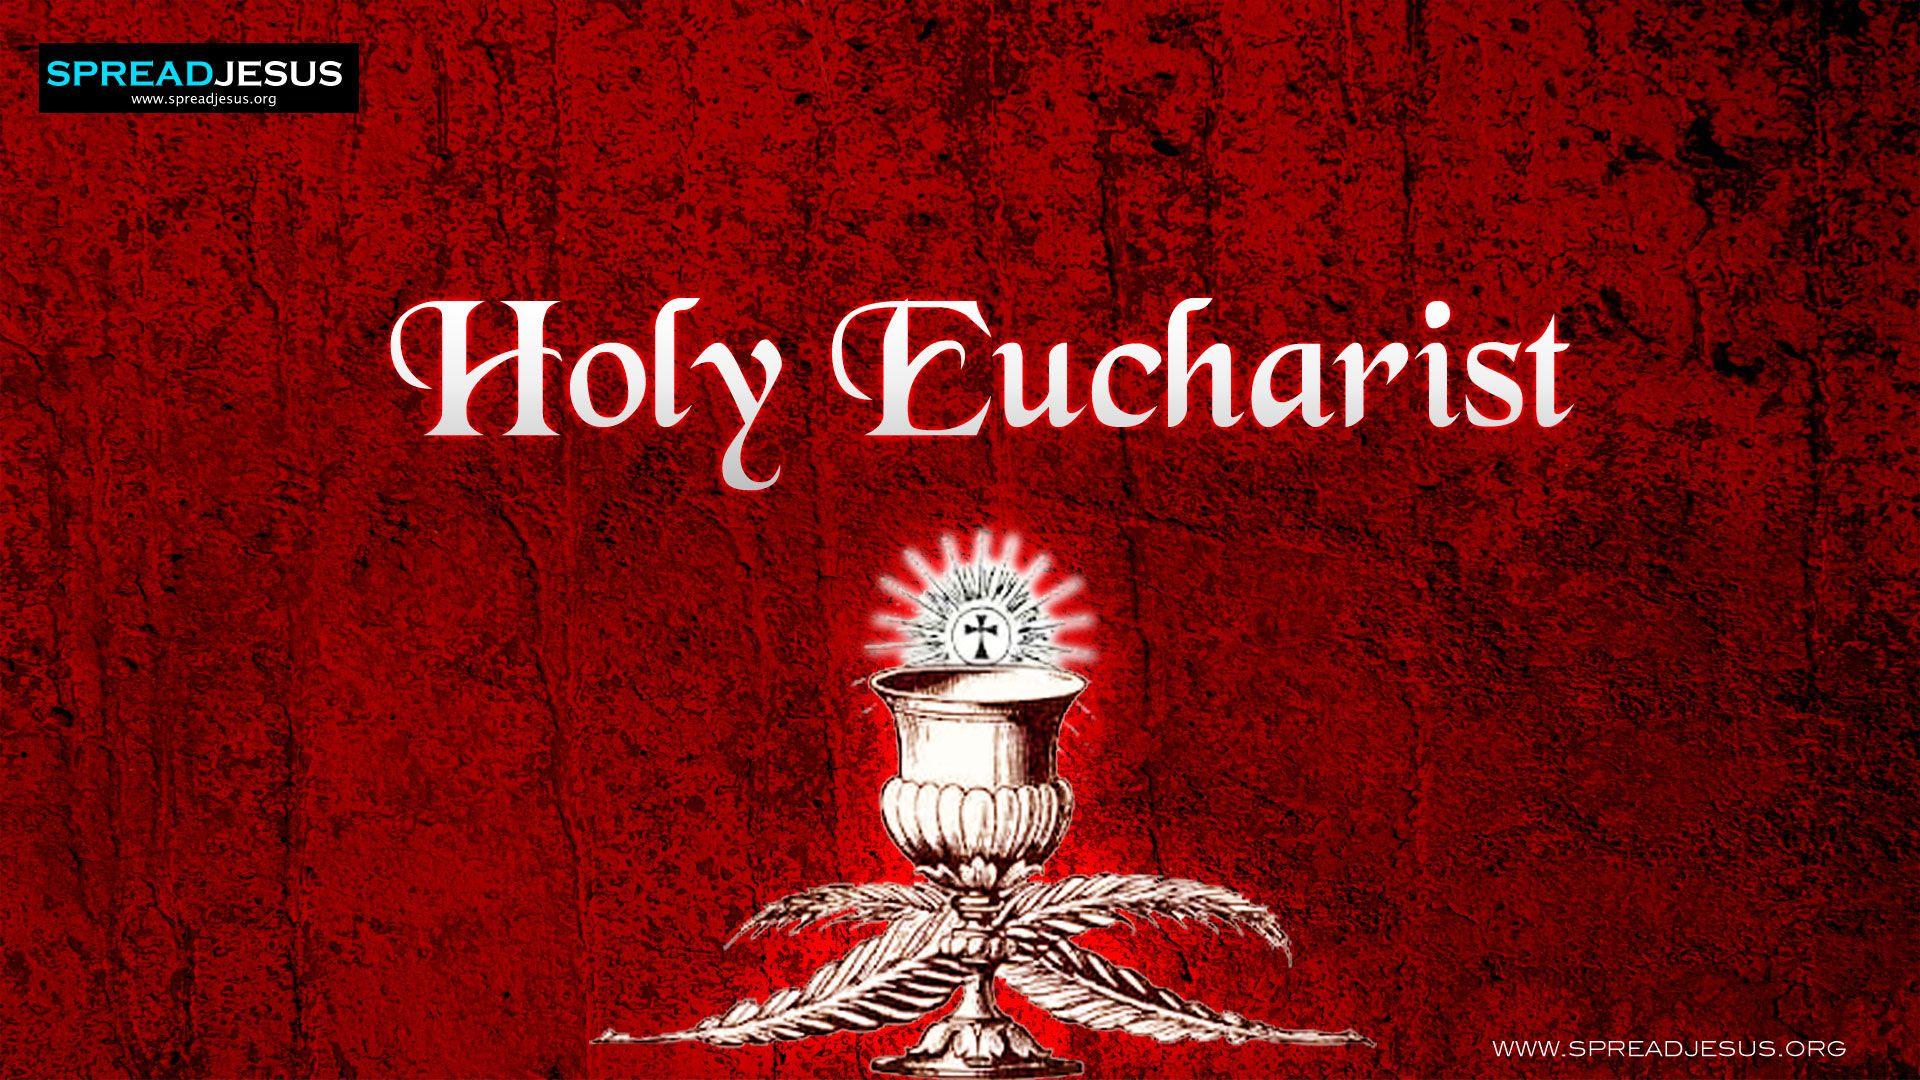 HOLY EUCHARIST The seven sacraments of the church Through Eucharist